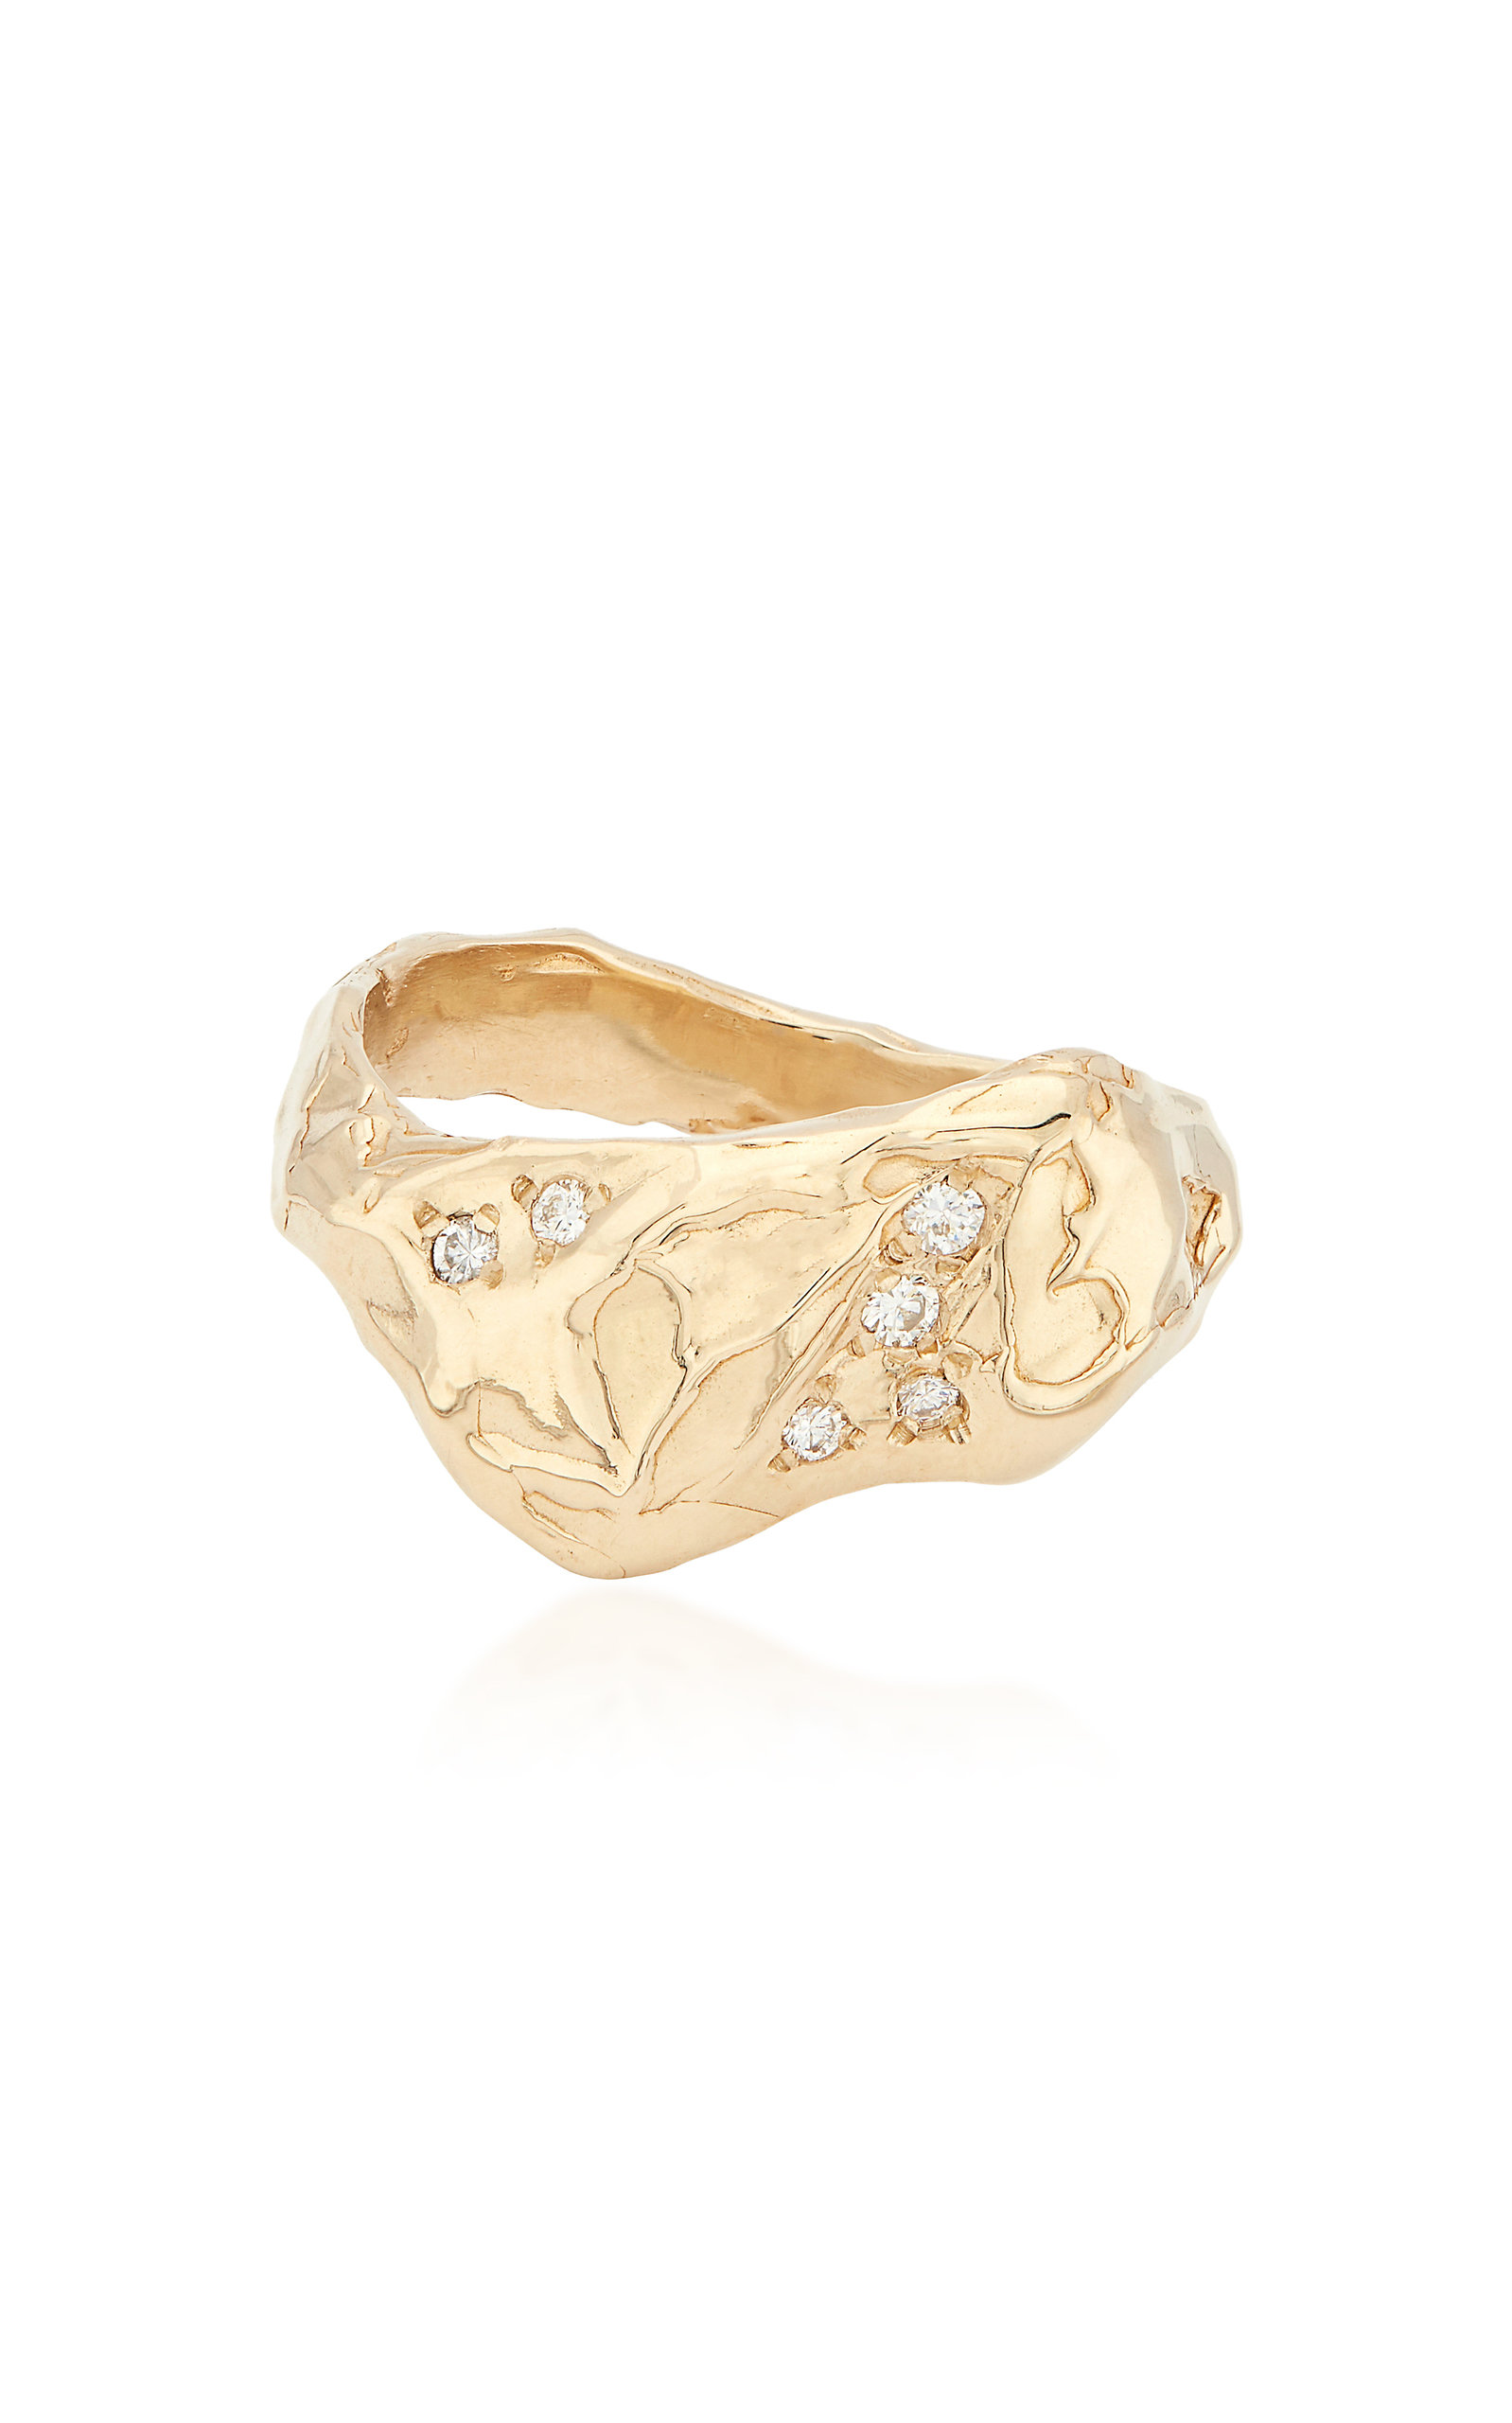 Fie Isolde Women's My Ray Small 14K Yellow Gold Diamond Ring